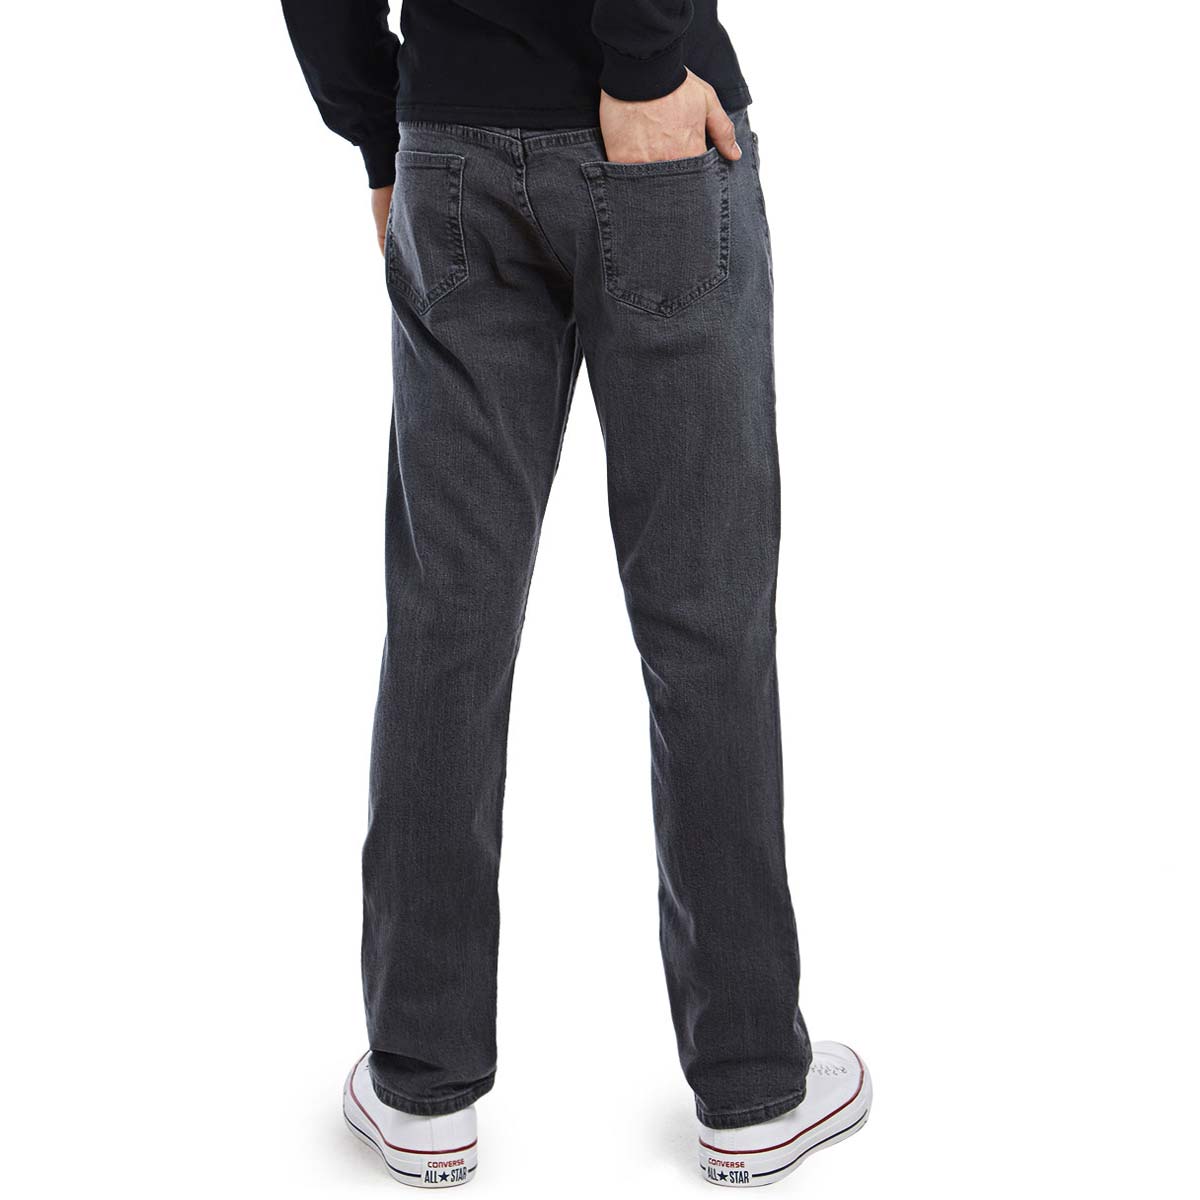 CCS Slim Fit Jeans - Grey image 3